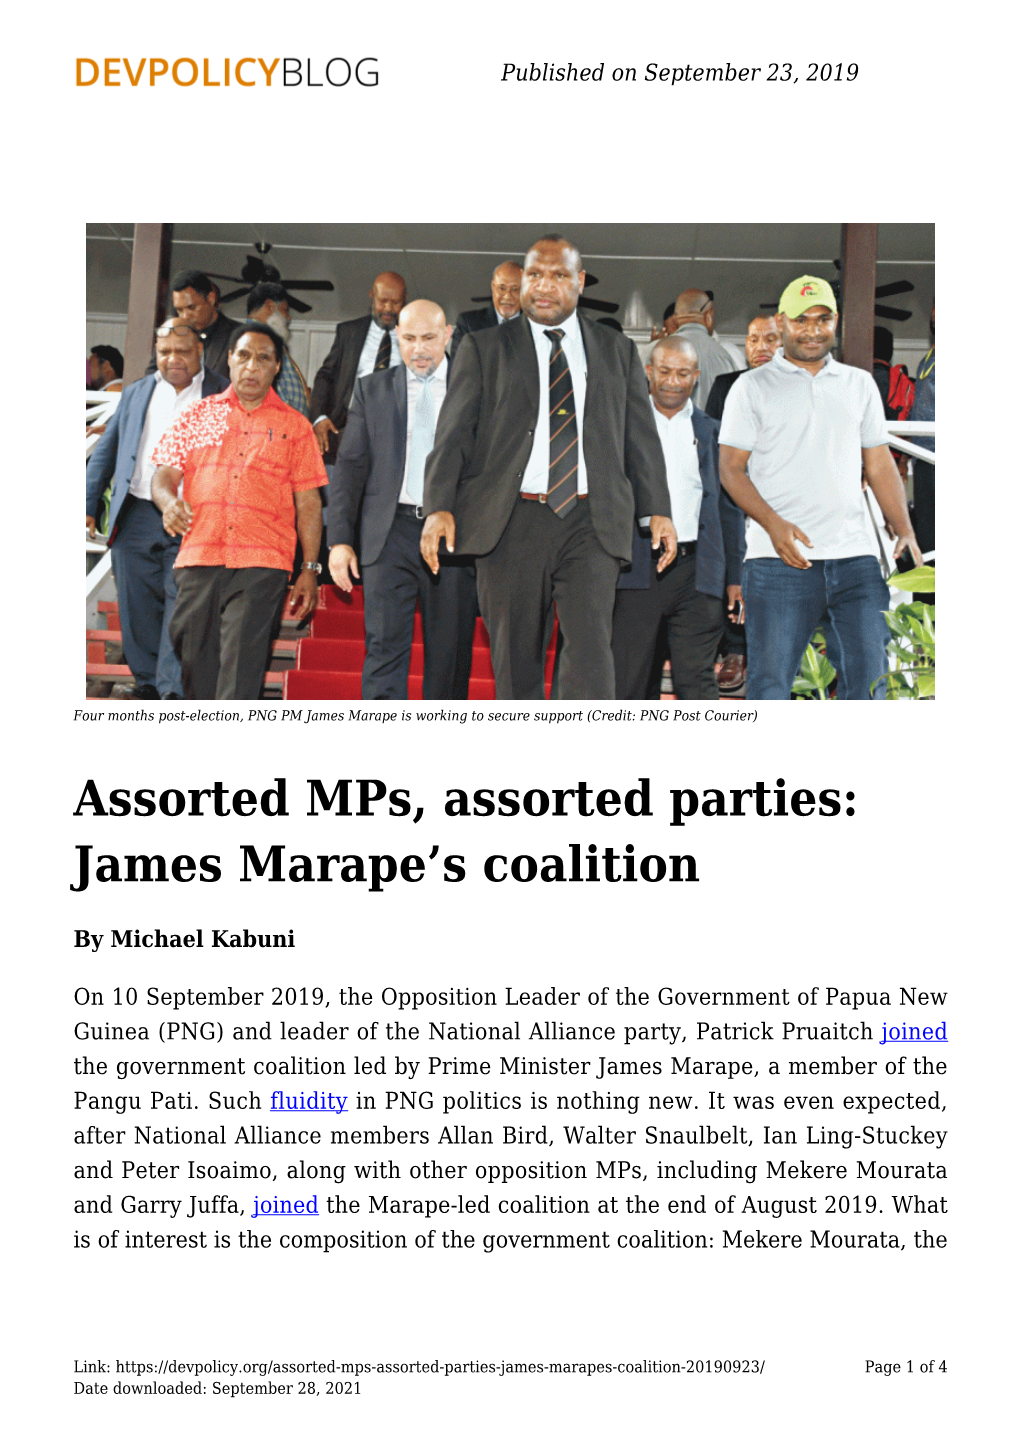 Assorted Mps, Assorted Parties: James Marape's Coalition